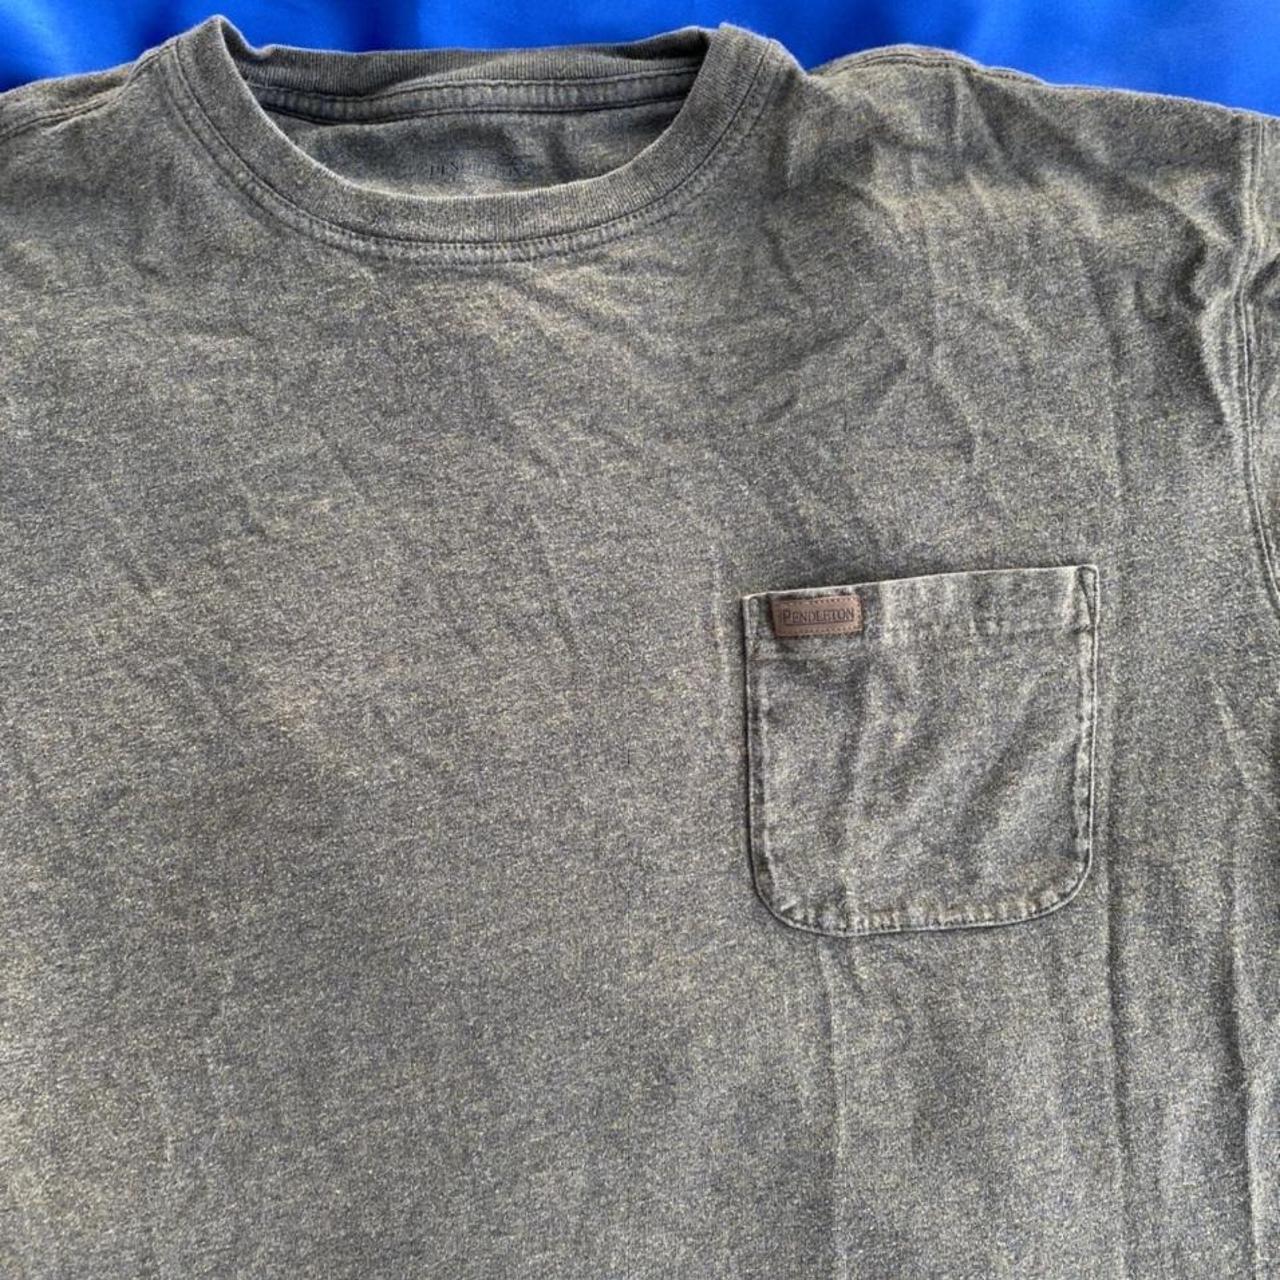 Product Image 2 - Pendleton Khaki 100% Cotton shirt!!

Cool